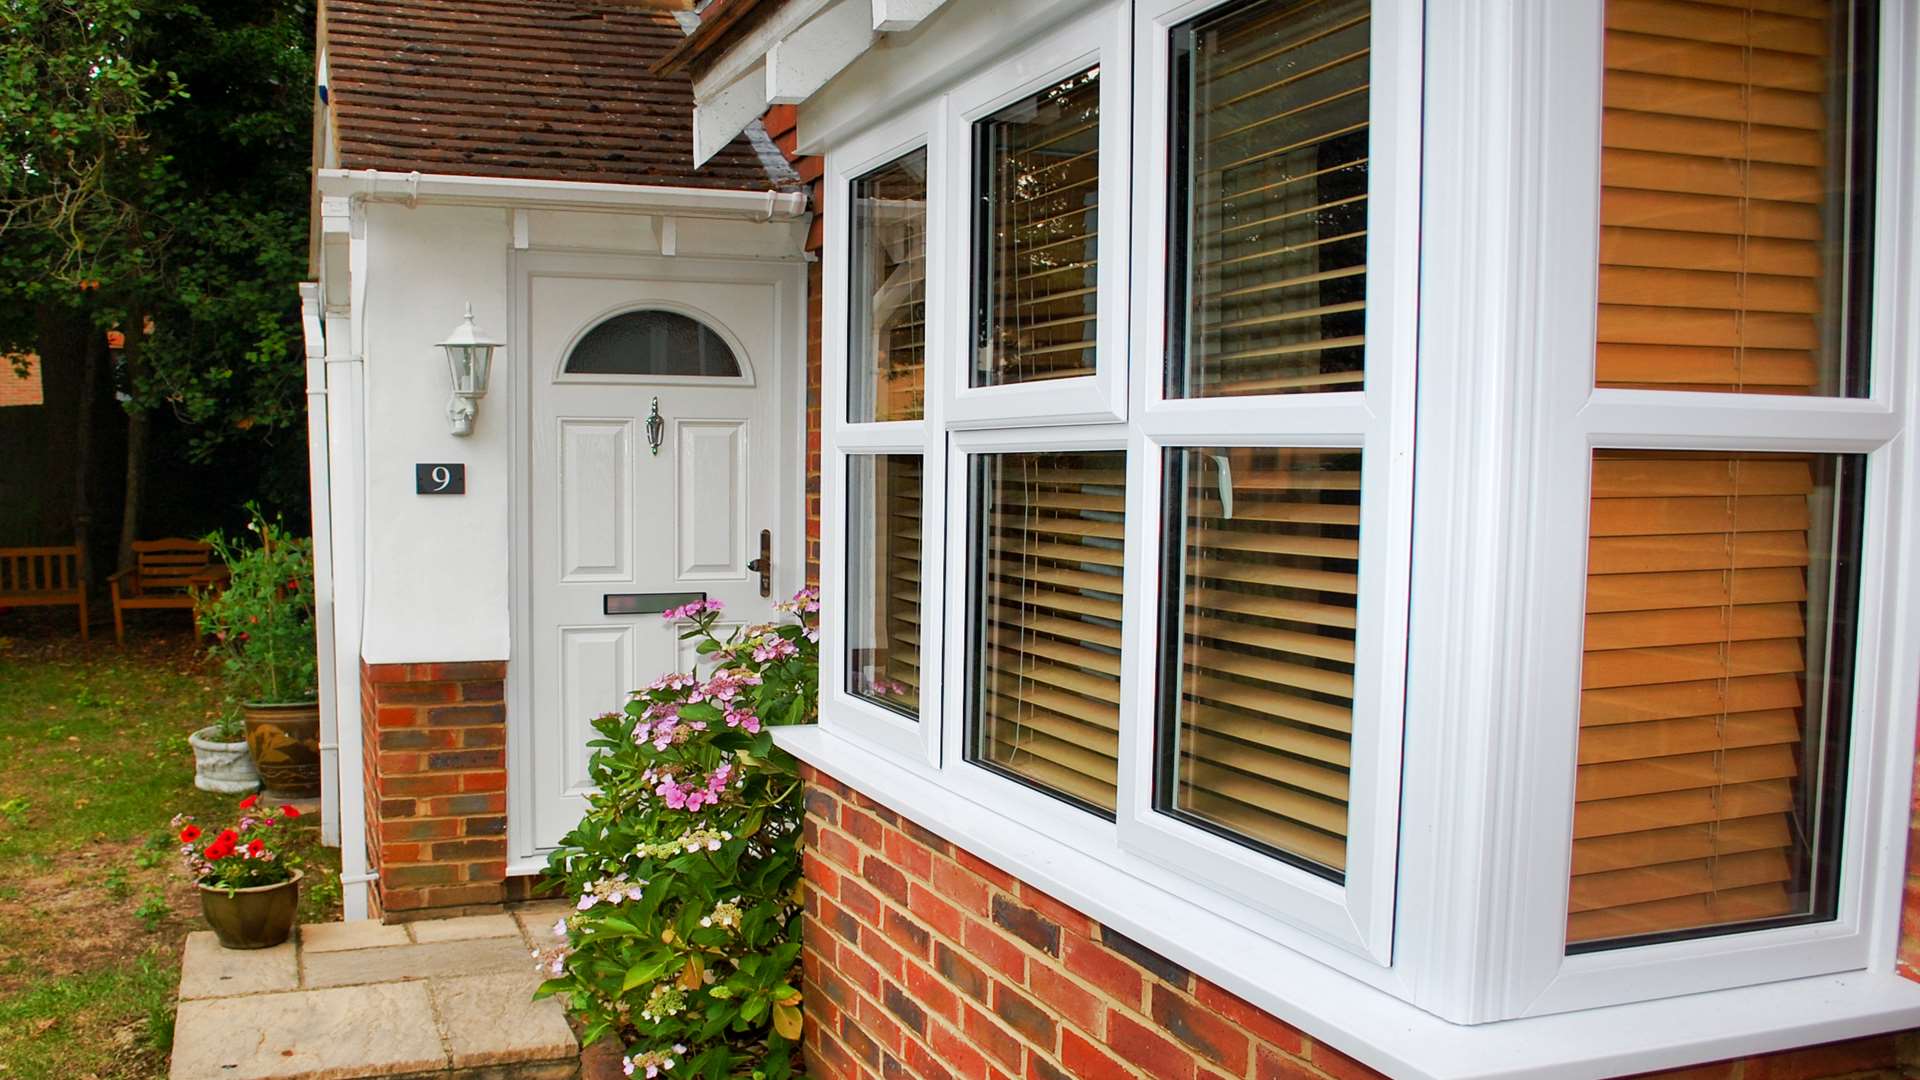 Britelite specialises in windows, doors and conservatories